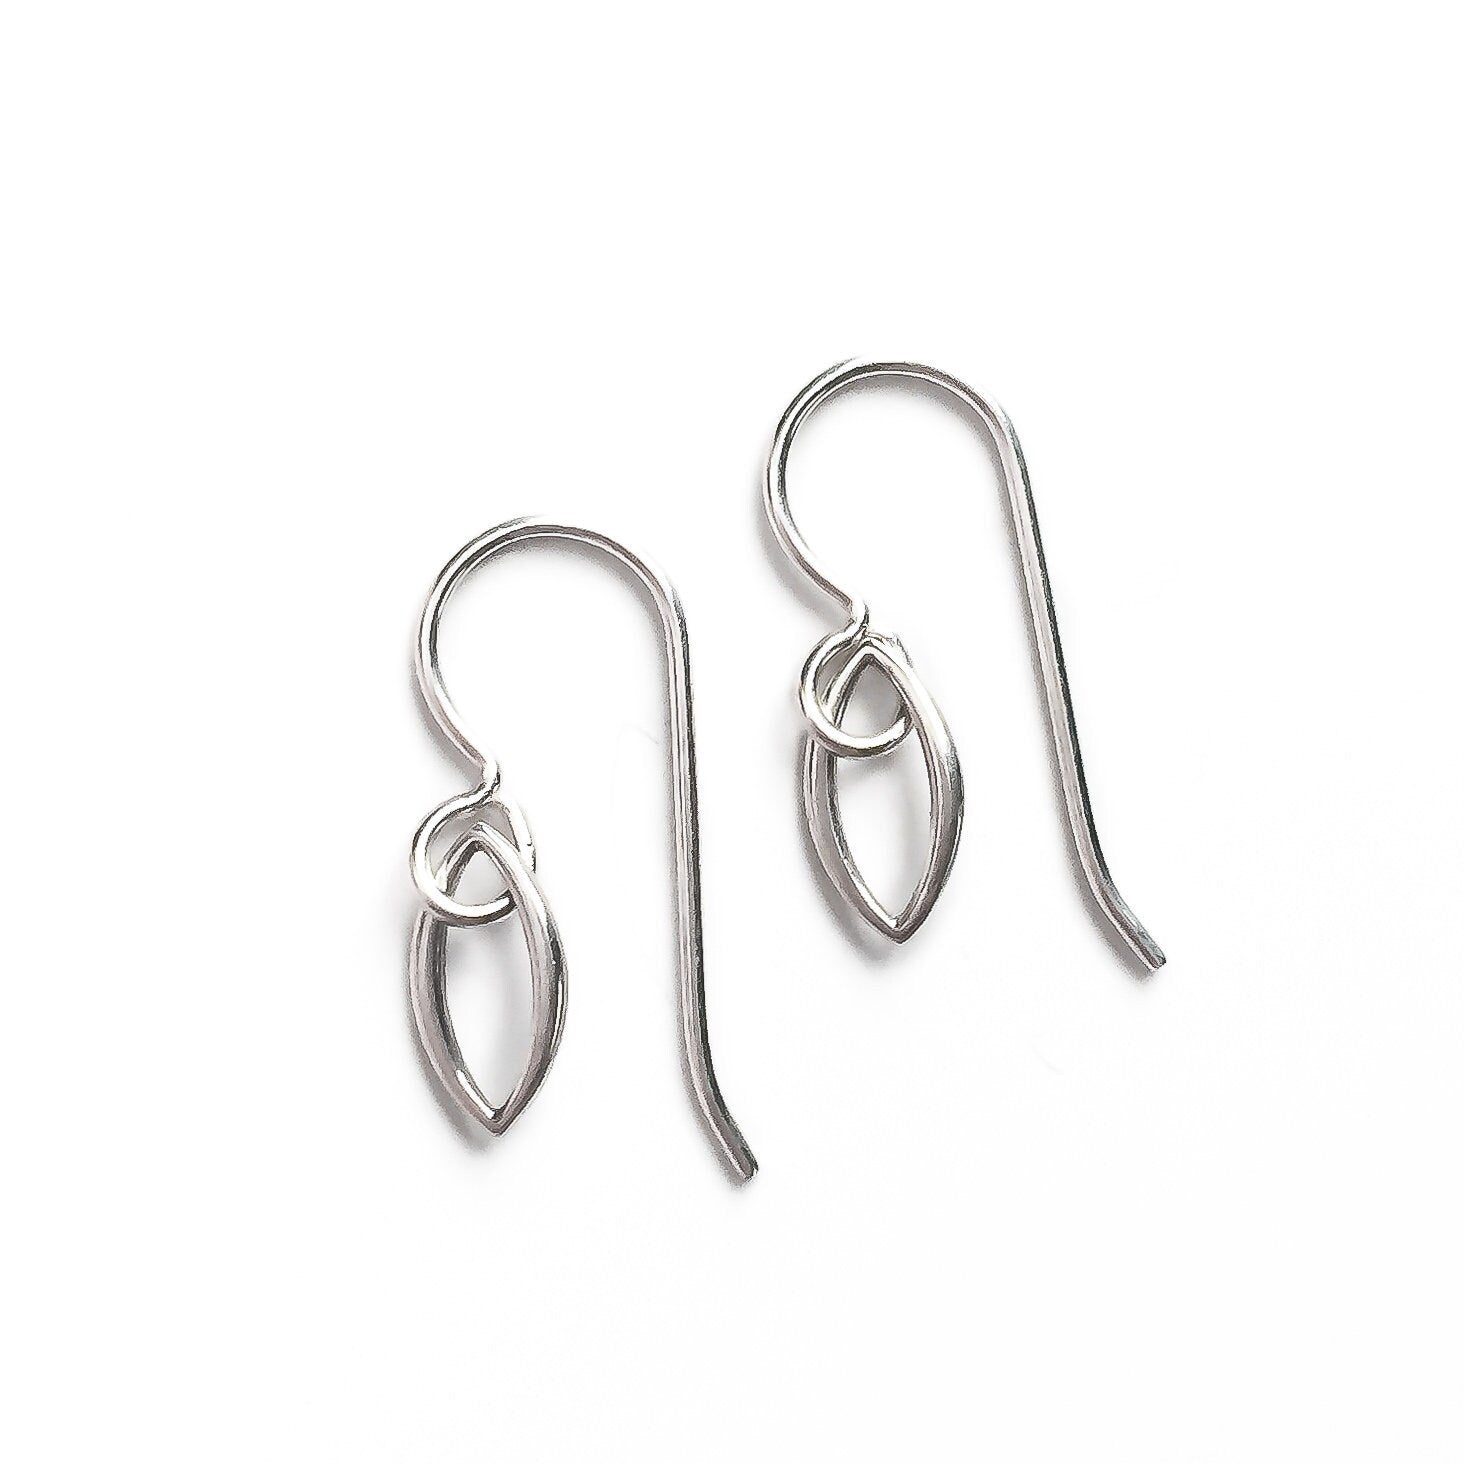 Tiny Leaf Petal Dangle Earrings - Melanie Golden Jewelry - dangle earrings, earrings, flora